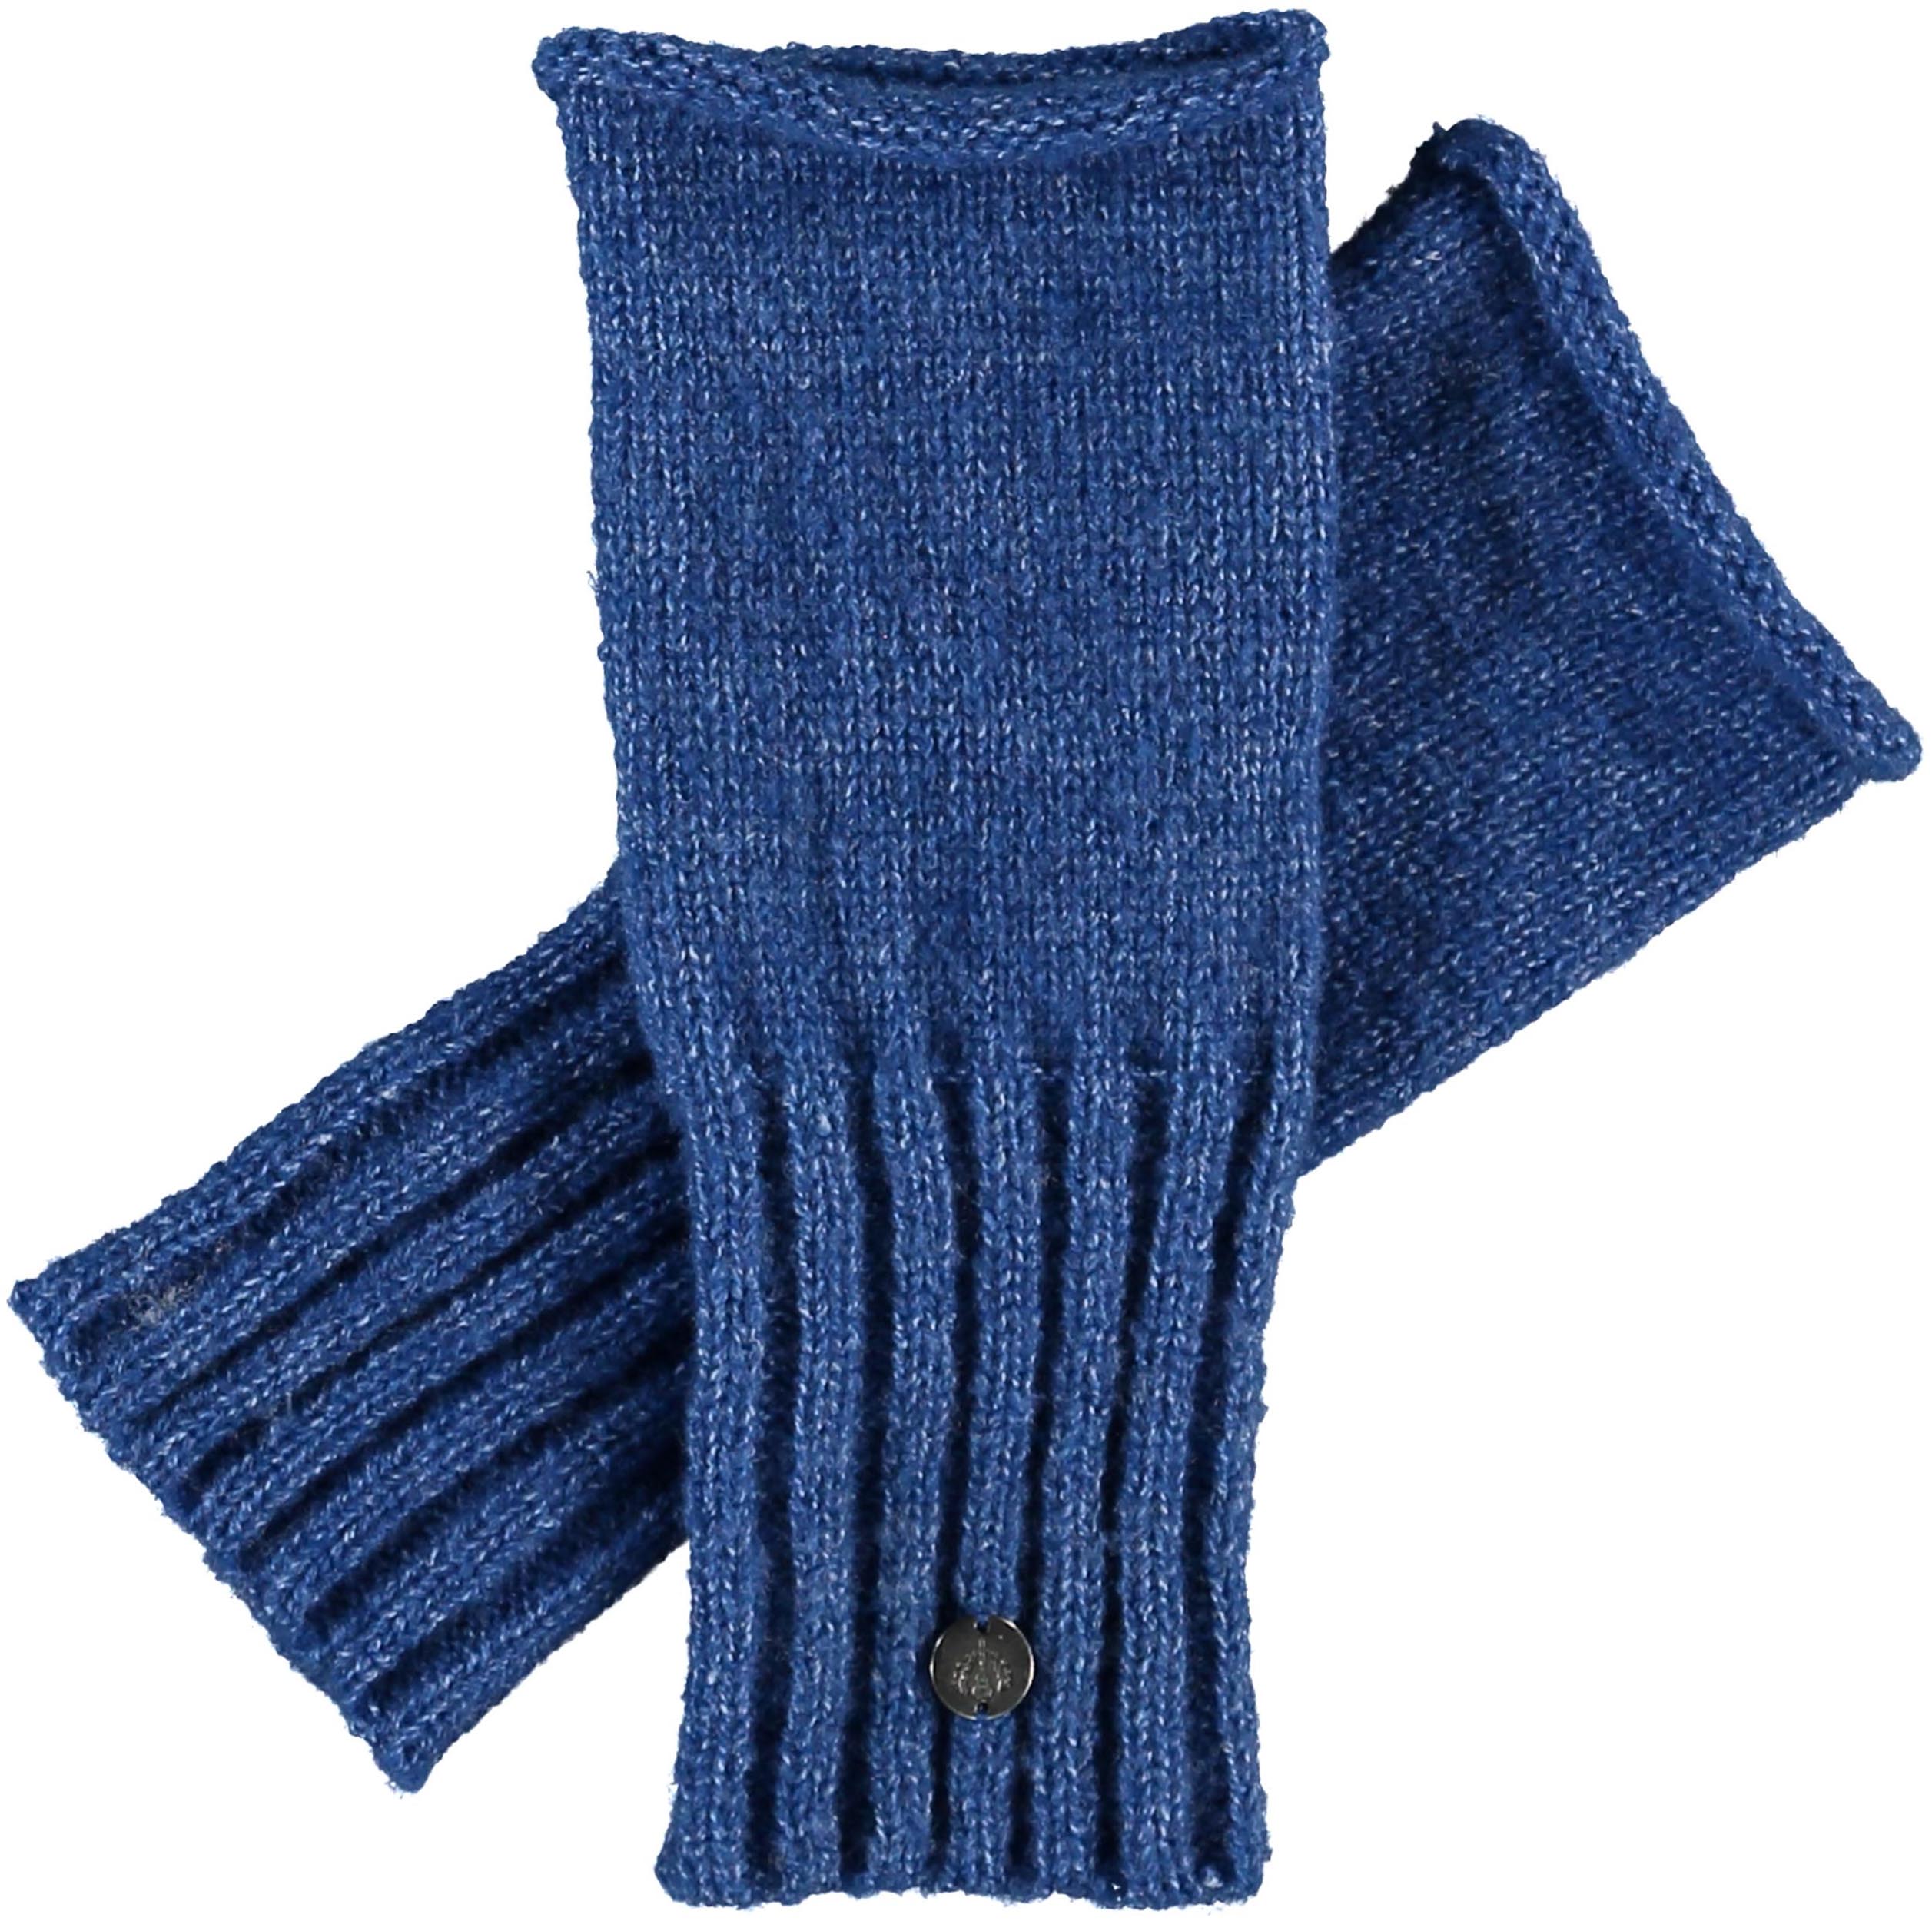 Knit Arm Warmers - Royal Blue